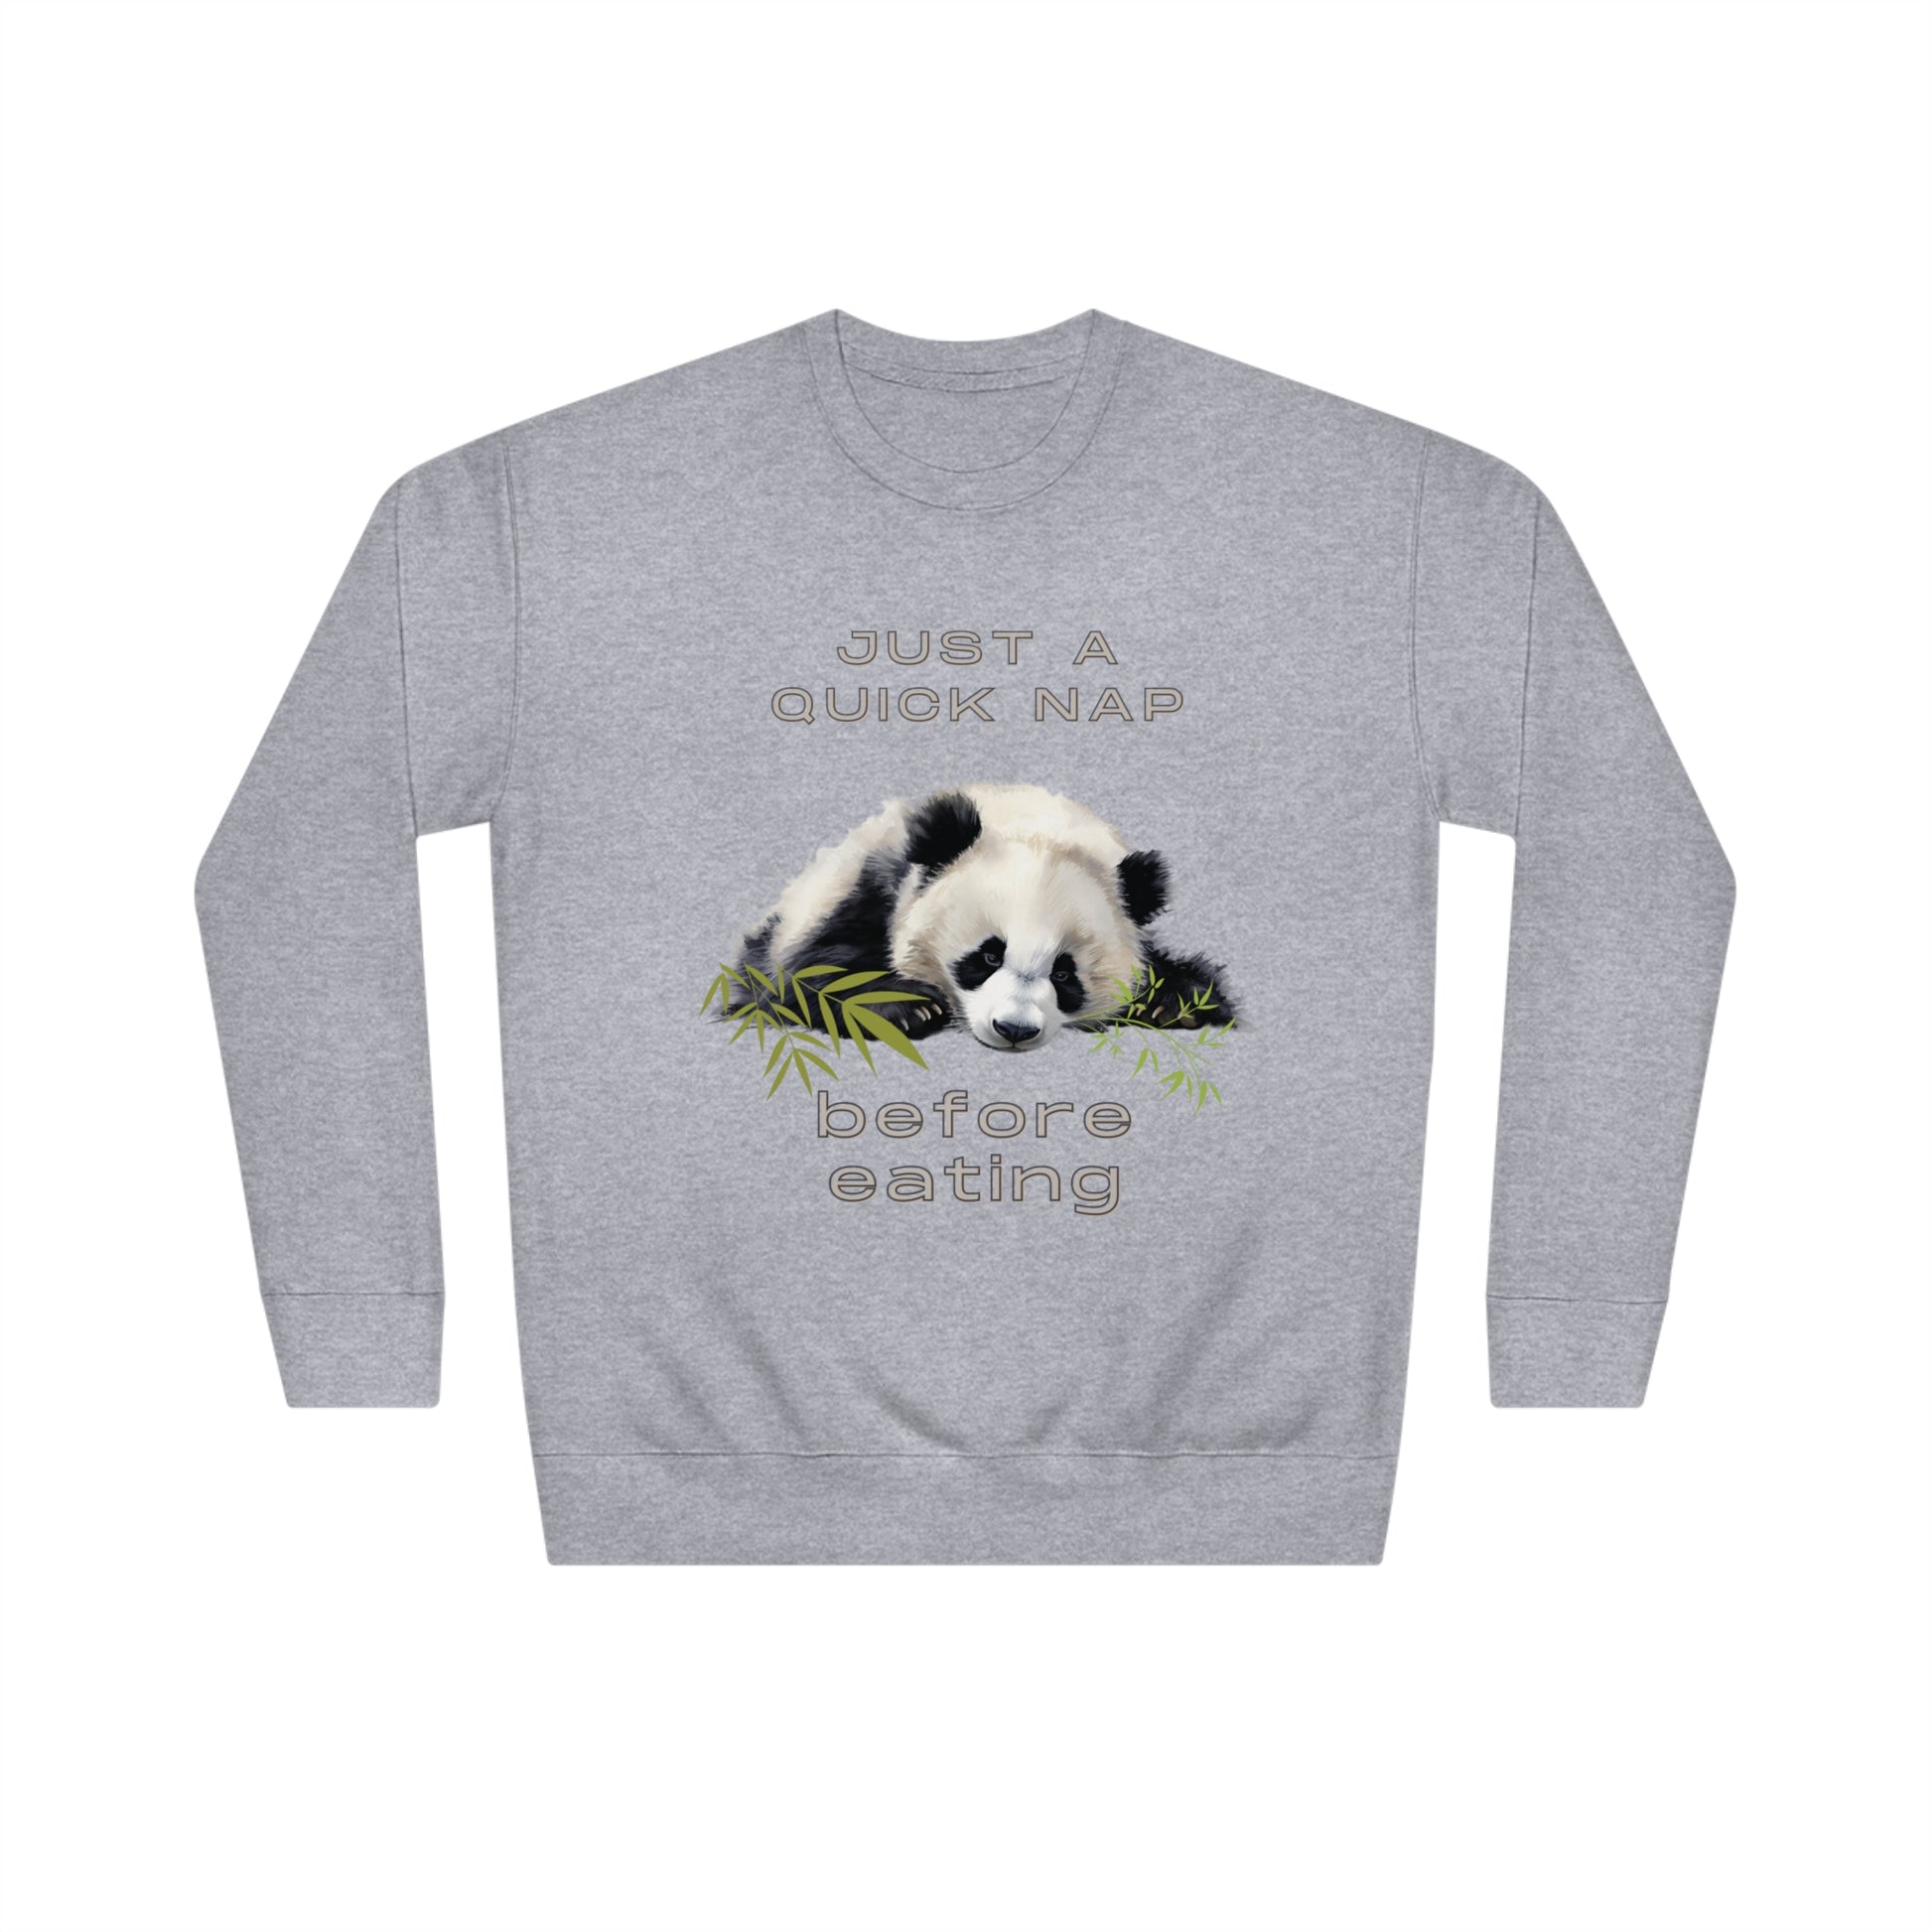 Just a Quick Nap Before Eating Sweatshirt | Embrace Cozy Relaxation | Funny Panda Sweatshirt Sweatshirt Carbon Grey S 